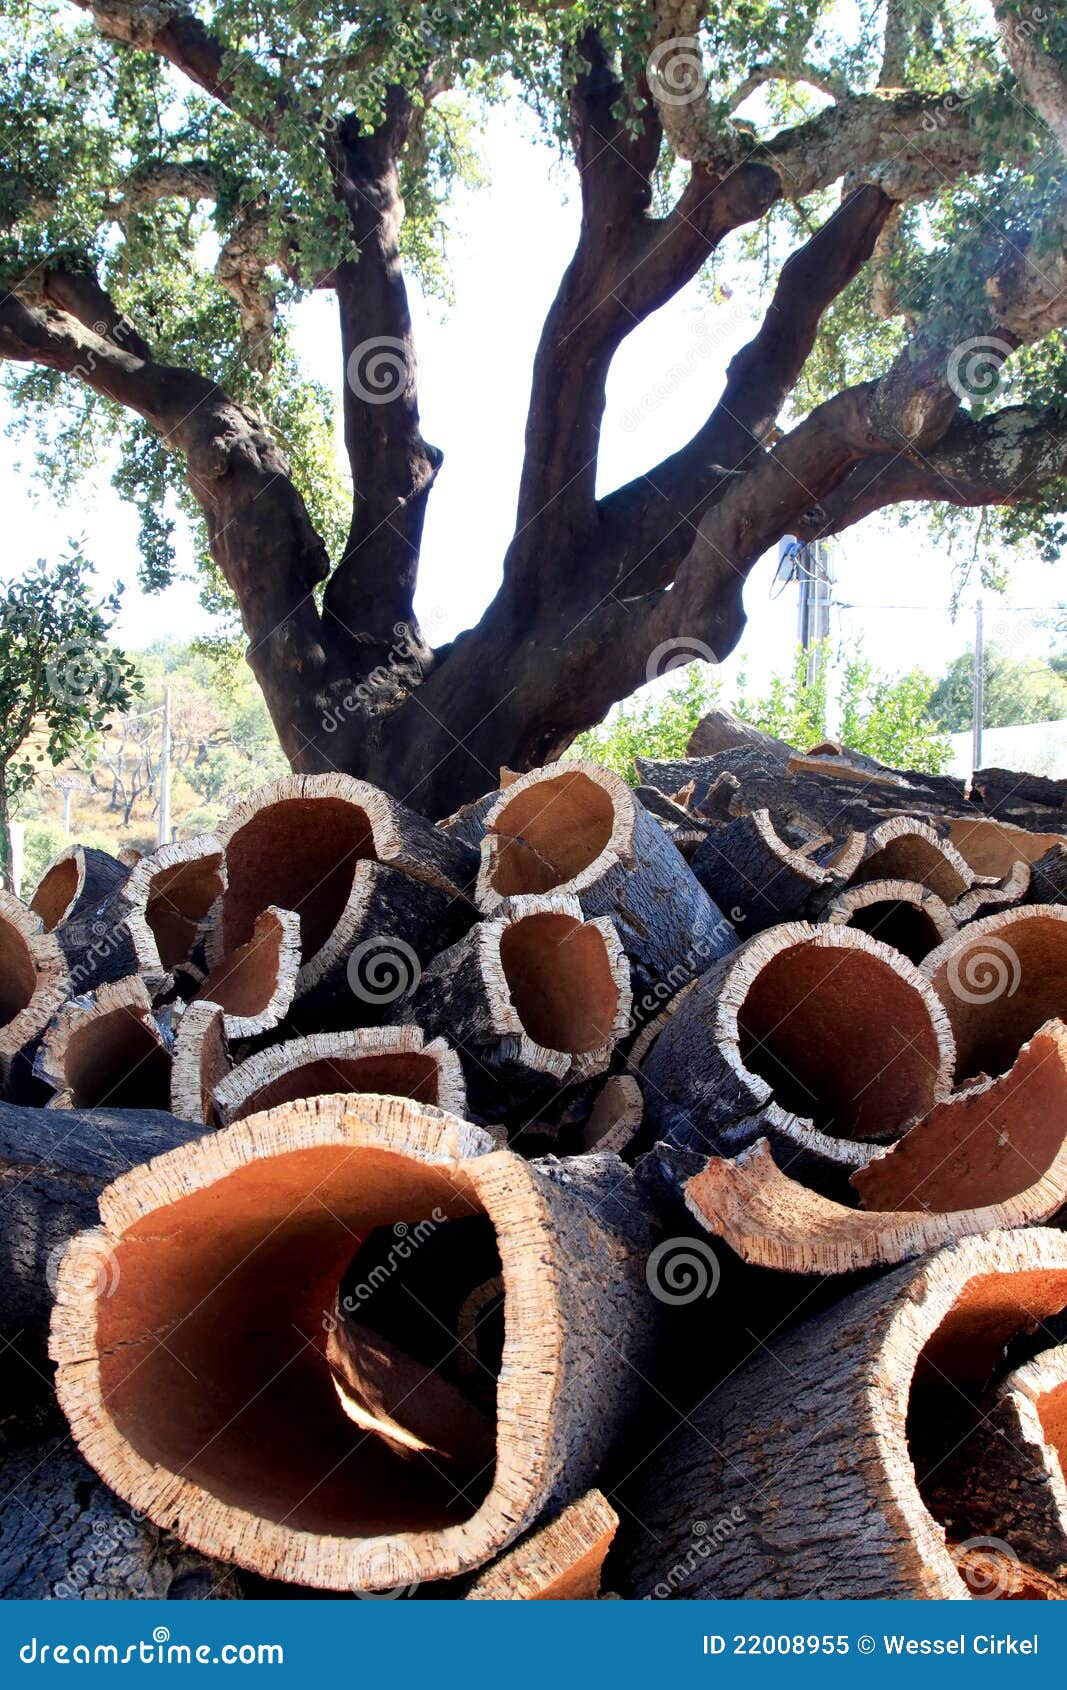 cork oak and stacked bark in alentejo, portugal